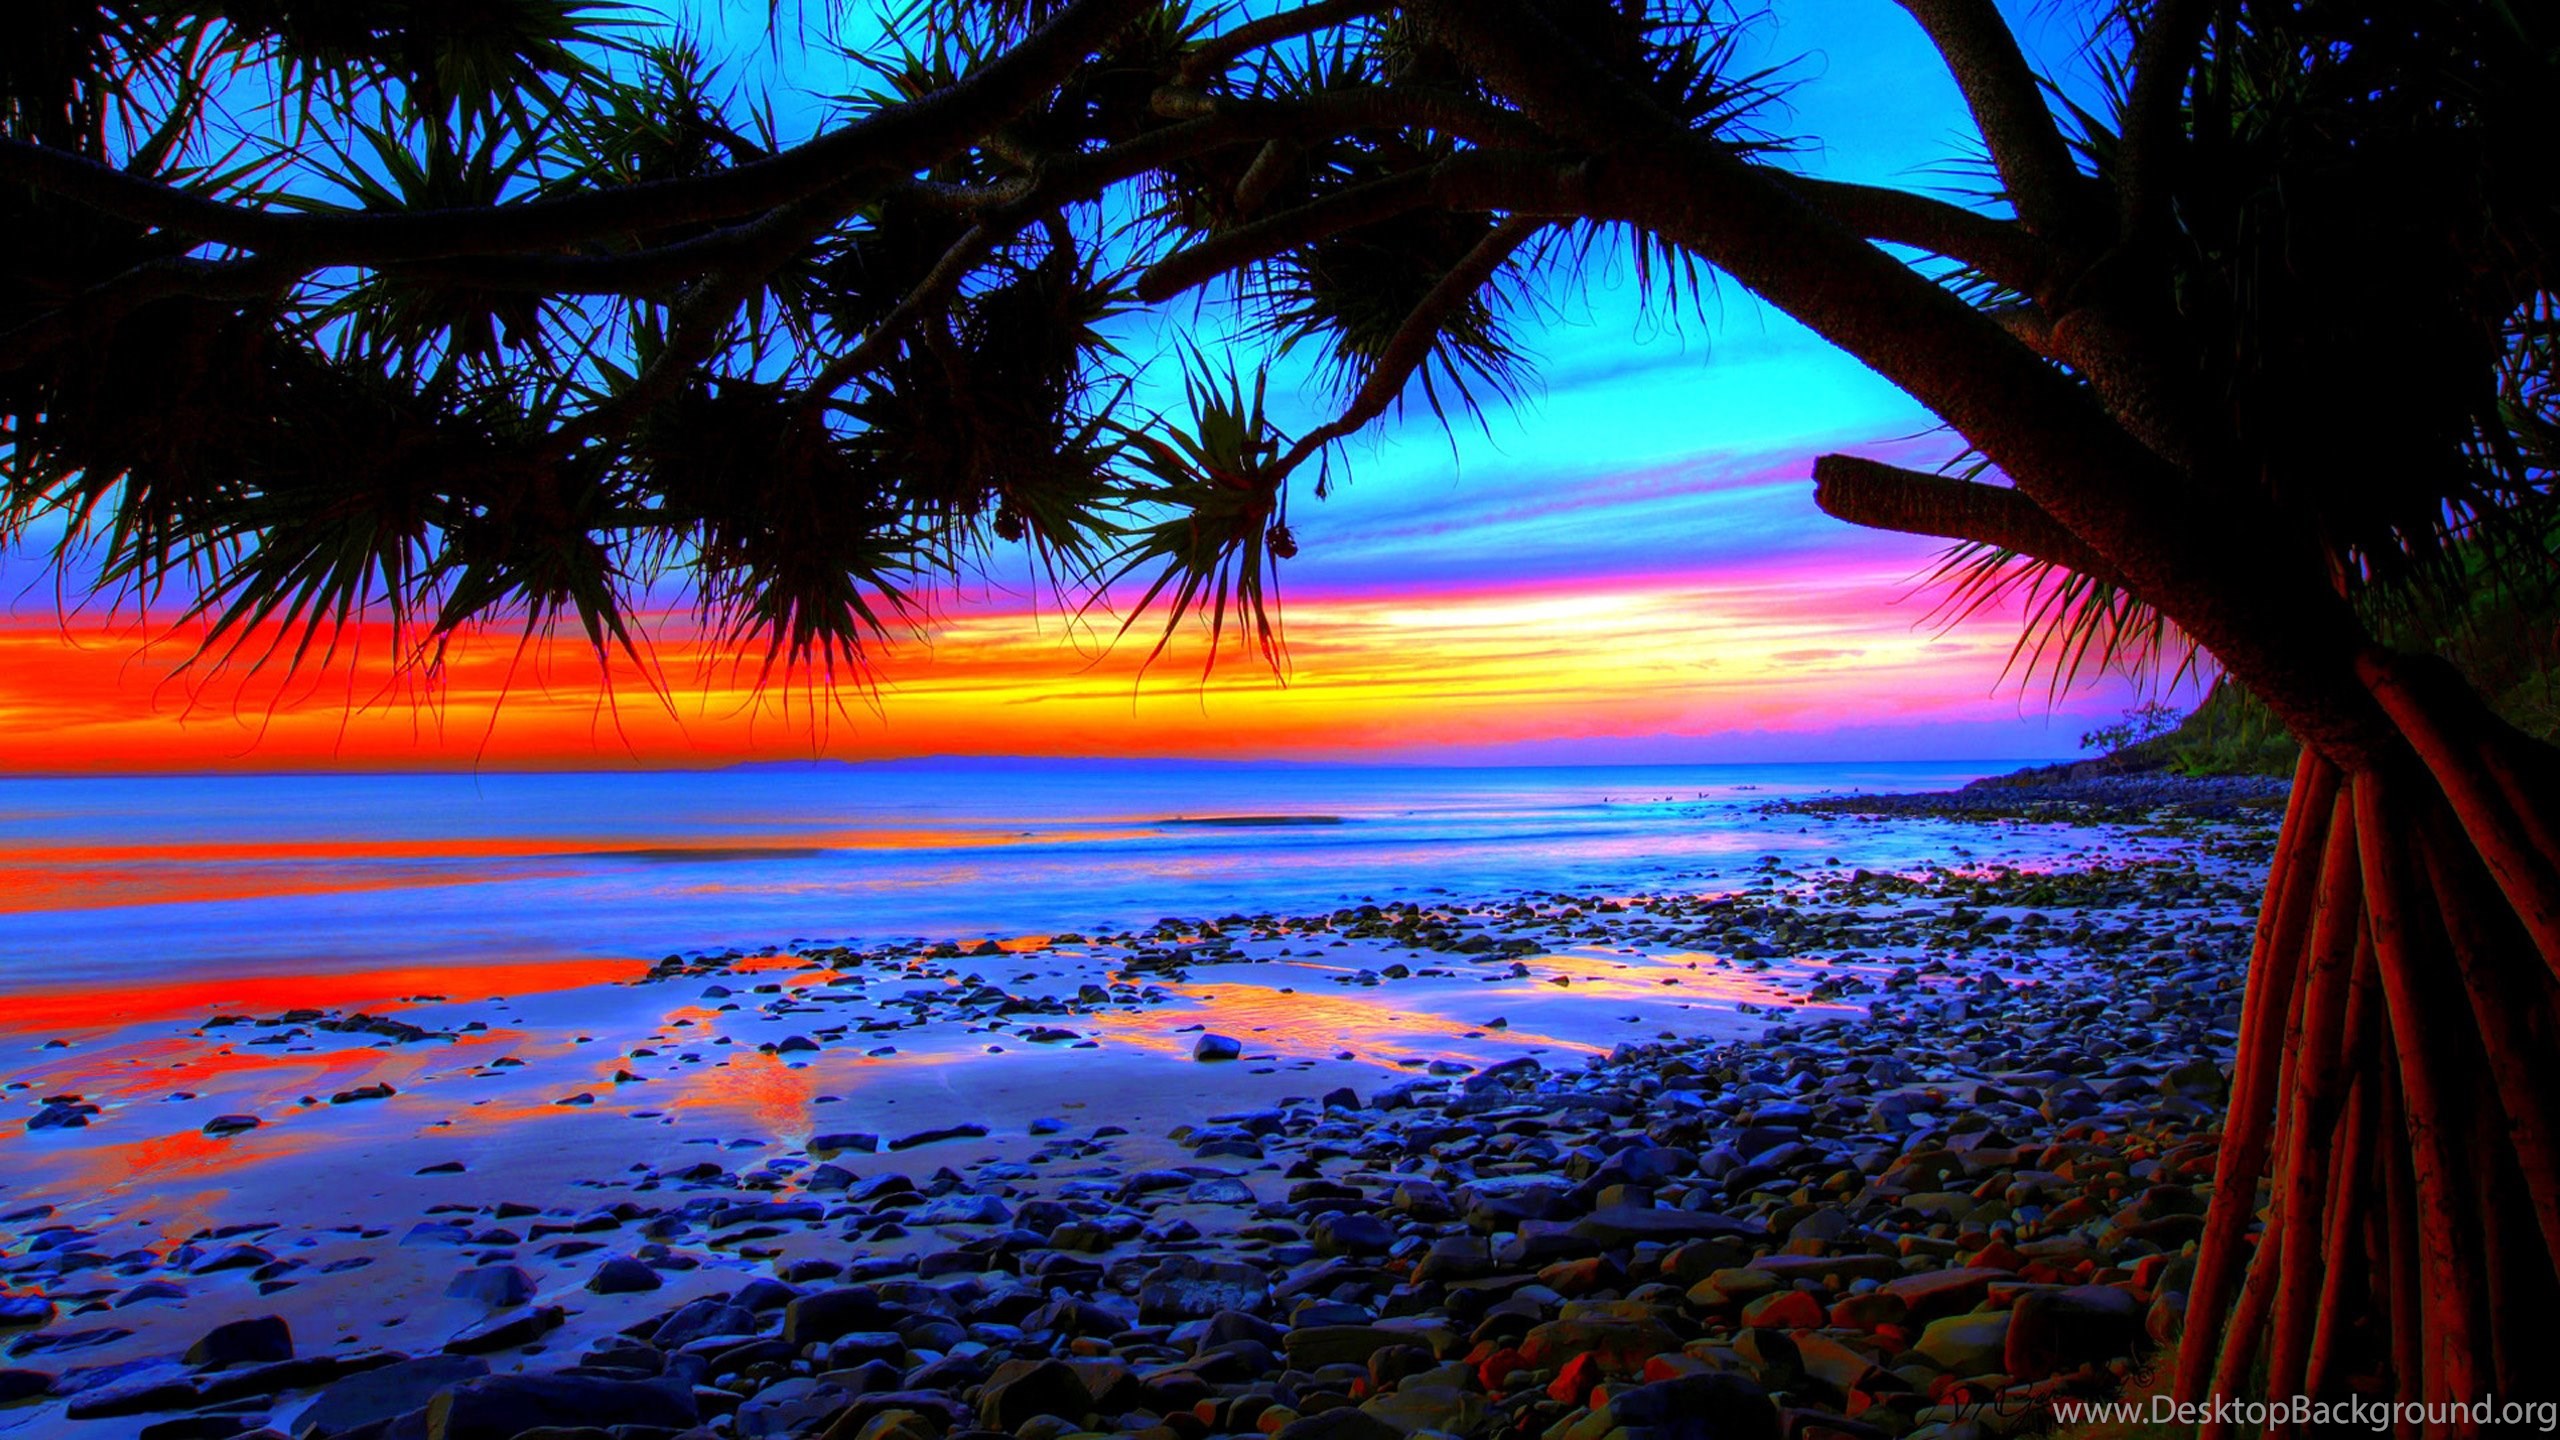 Tropical Beach Sunset Wallpapers 4k Hd Tropical Beach Sunset Backgrounds On Wallpaperbat